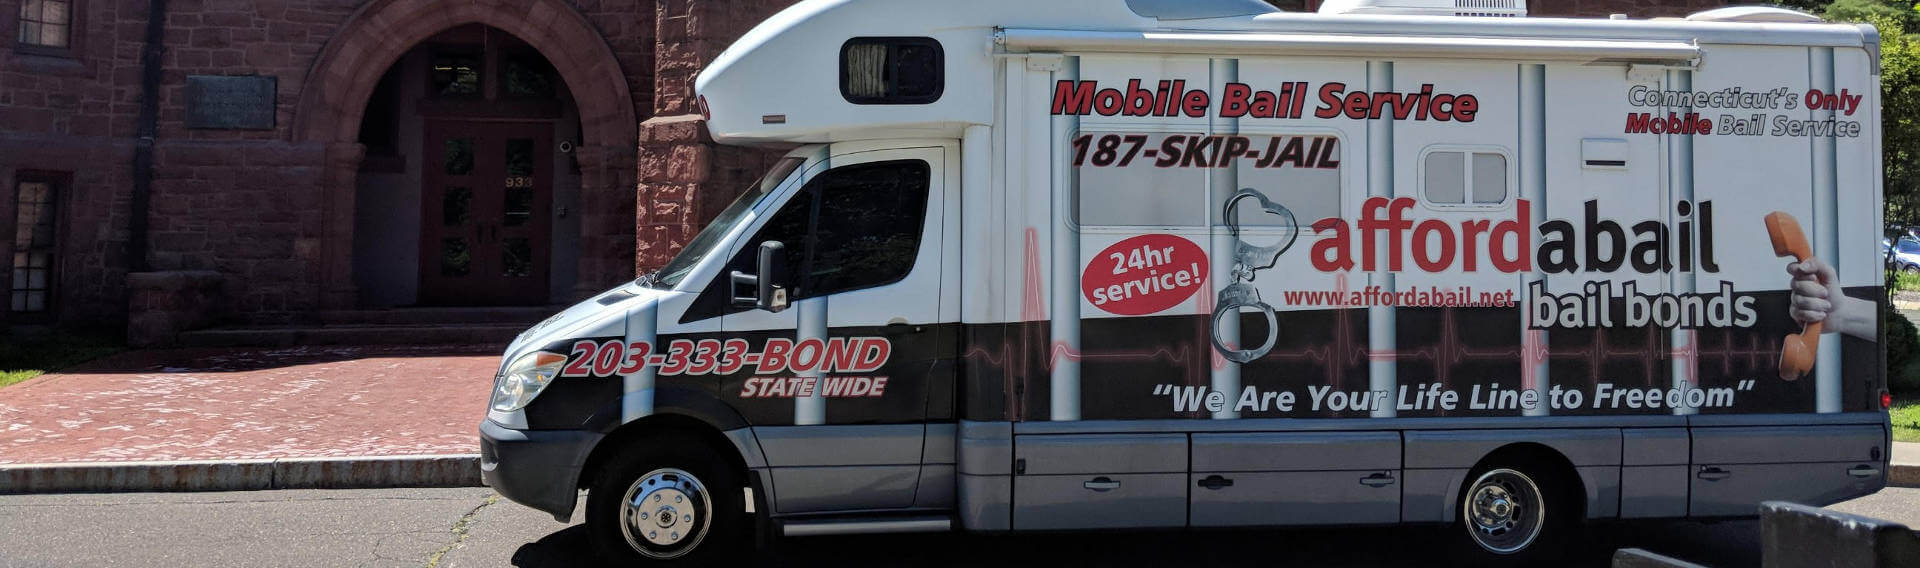 Mobile bail bonds service in Meriden CT